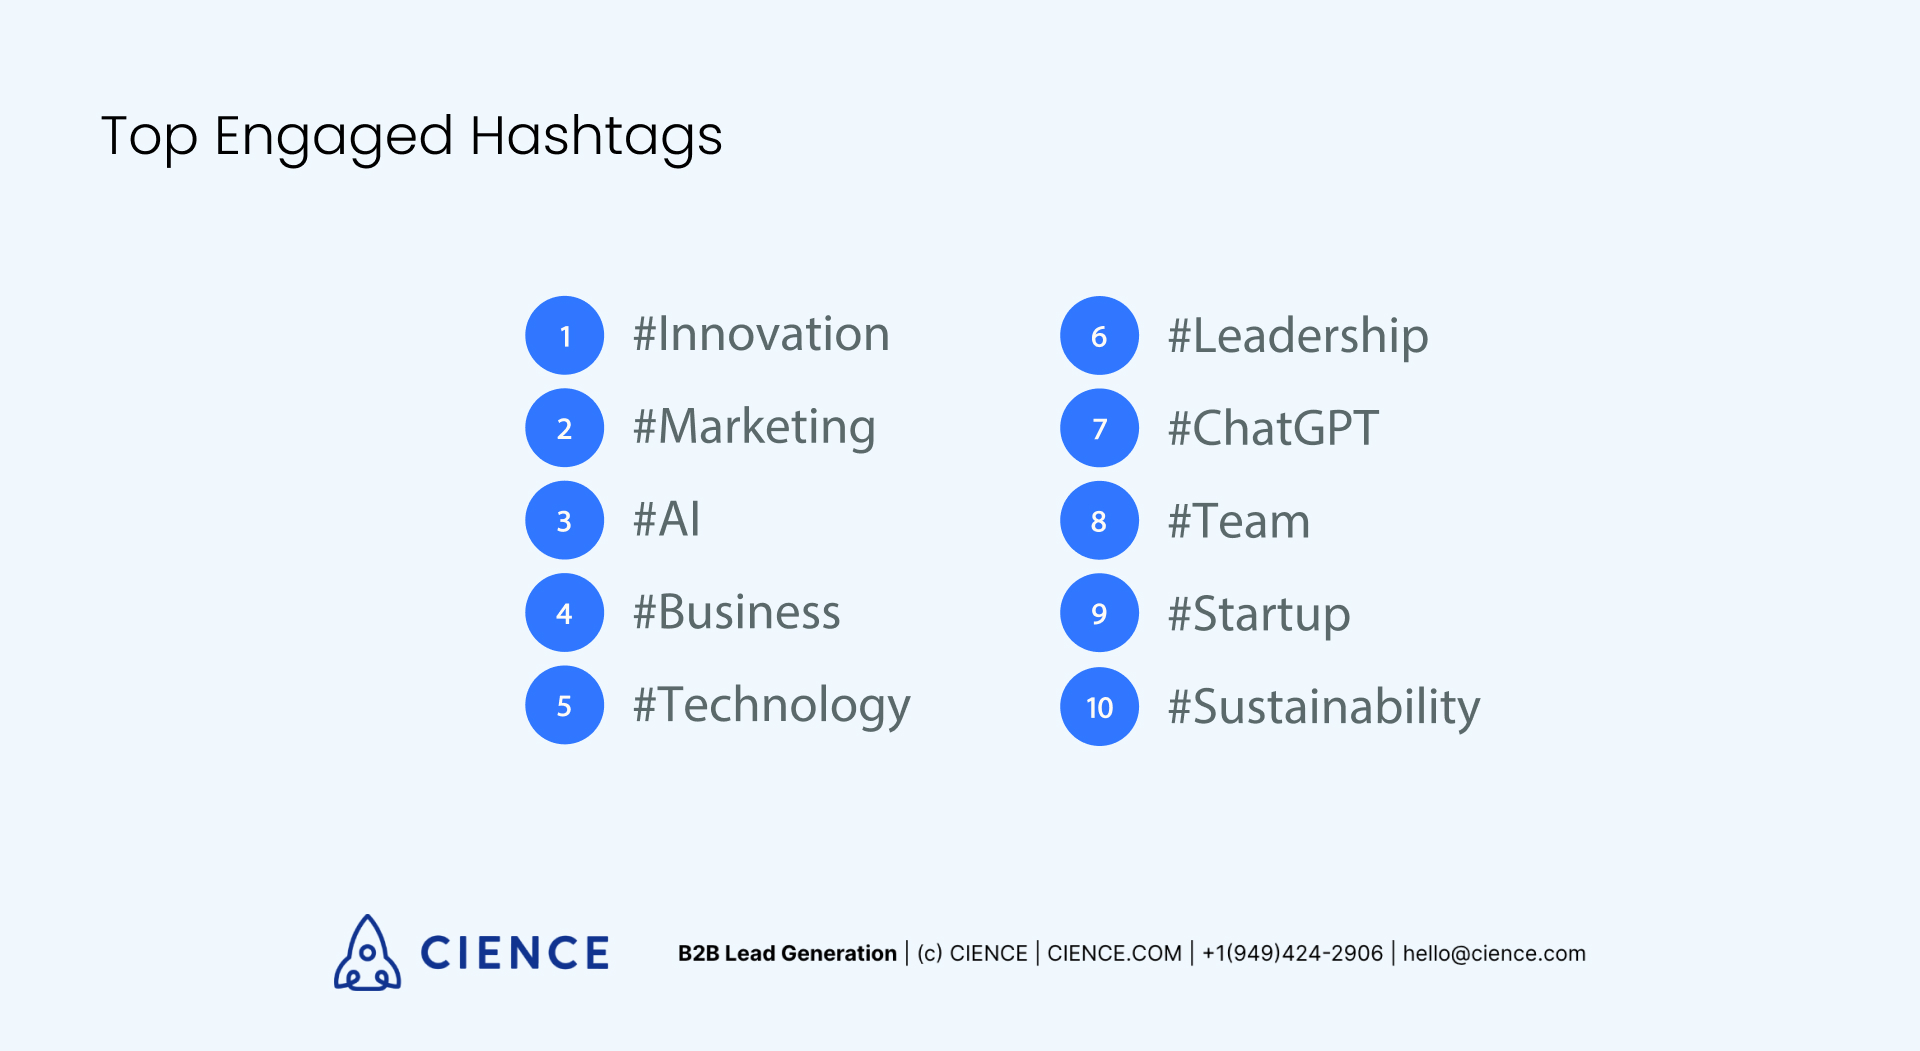 Top Engaged Hashtags - LinkedIn Data